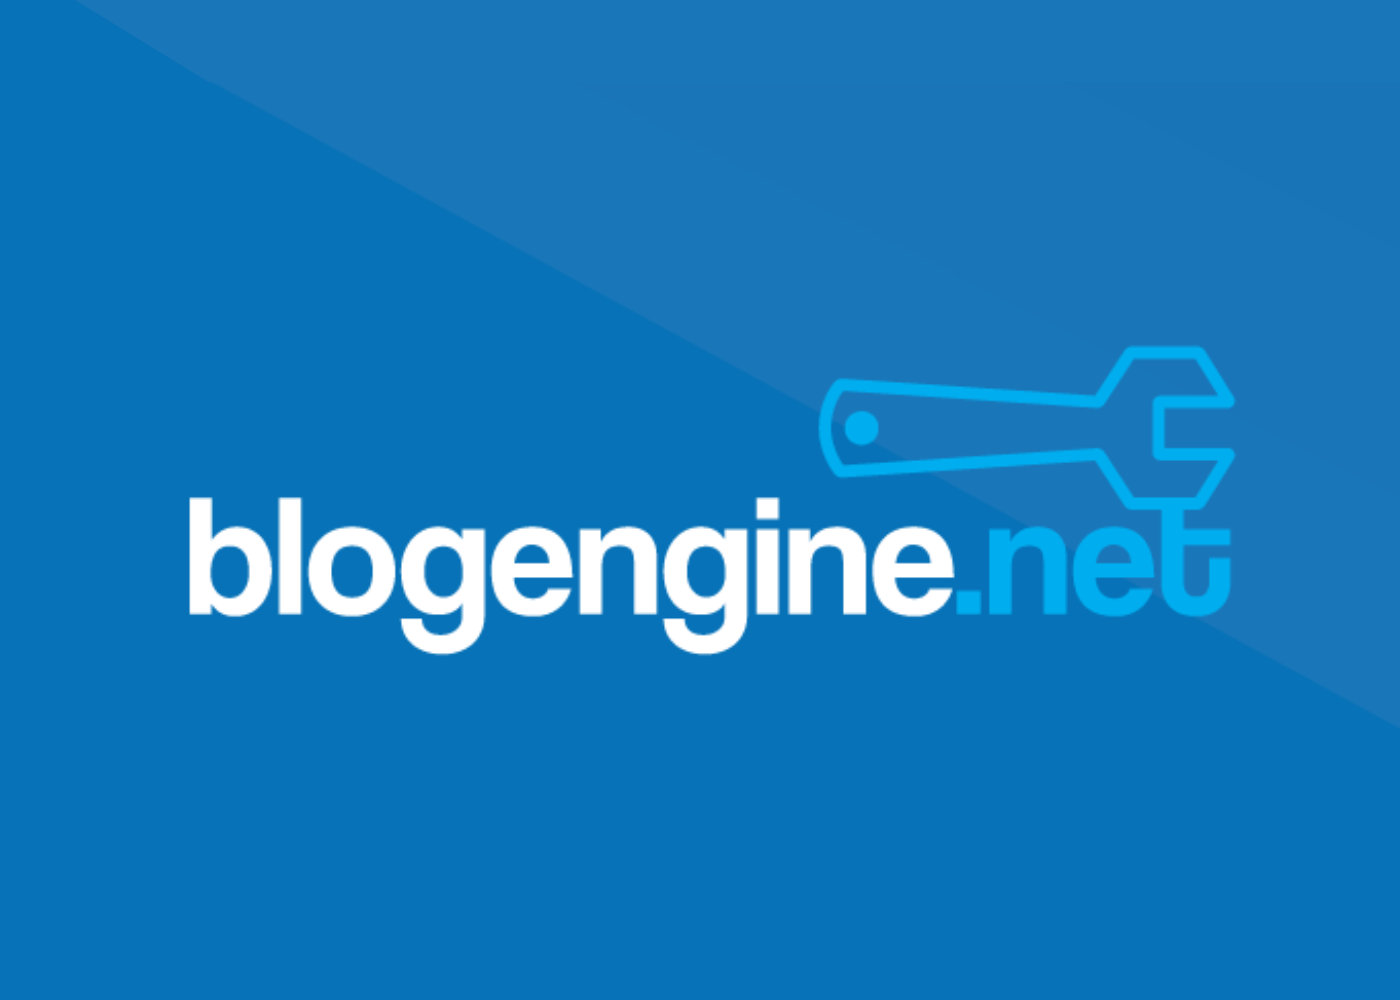 BlogEngine Is An Open-Source Blogging Platform With The ASP.NET Framework